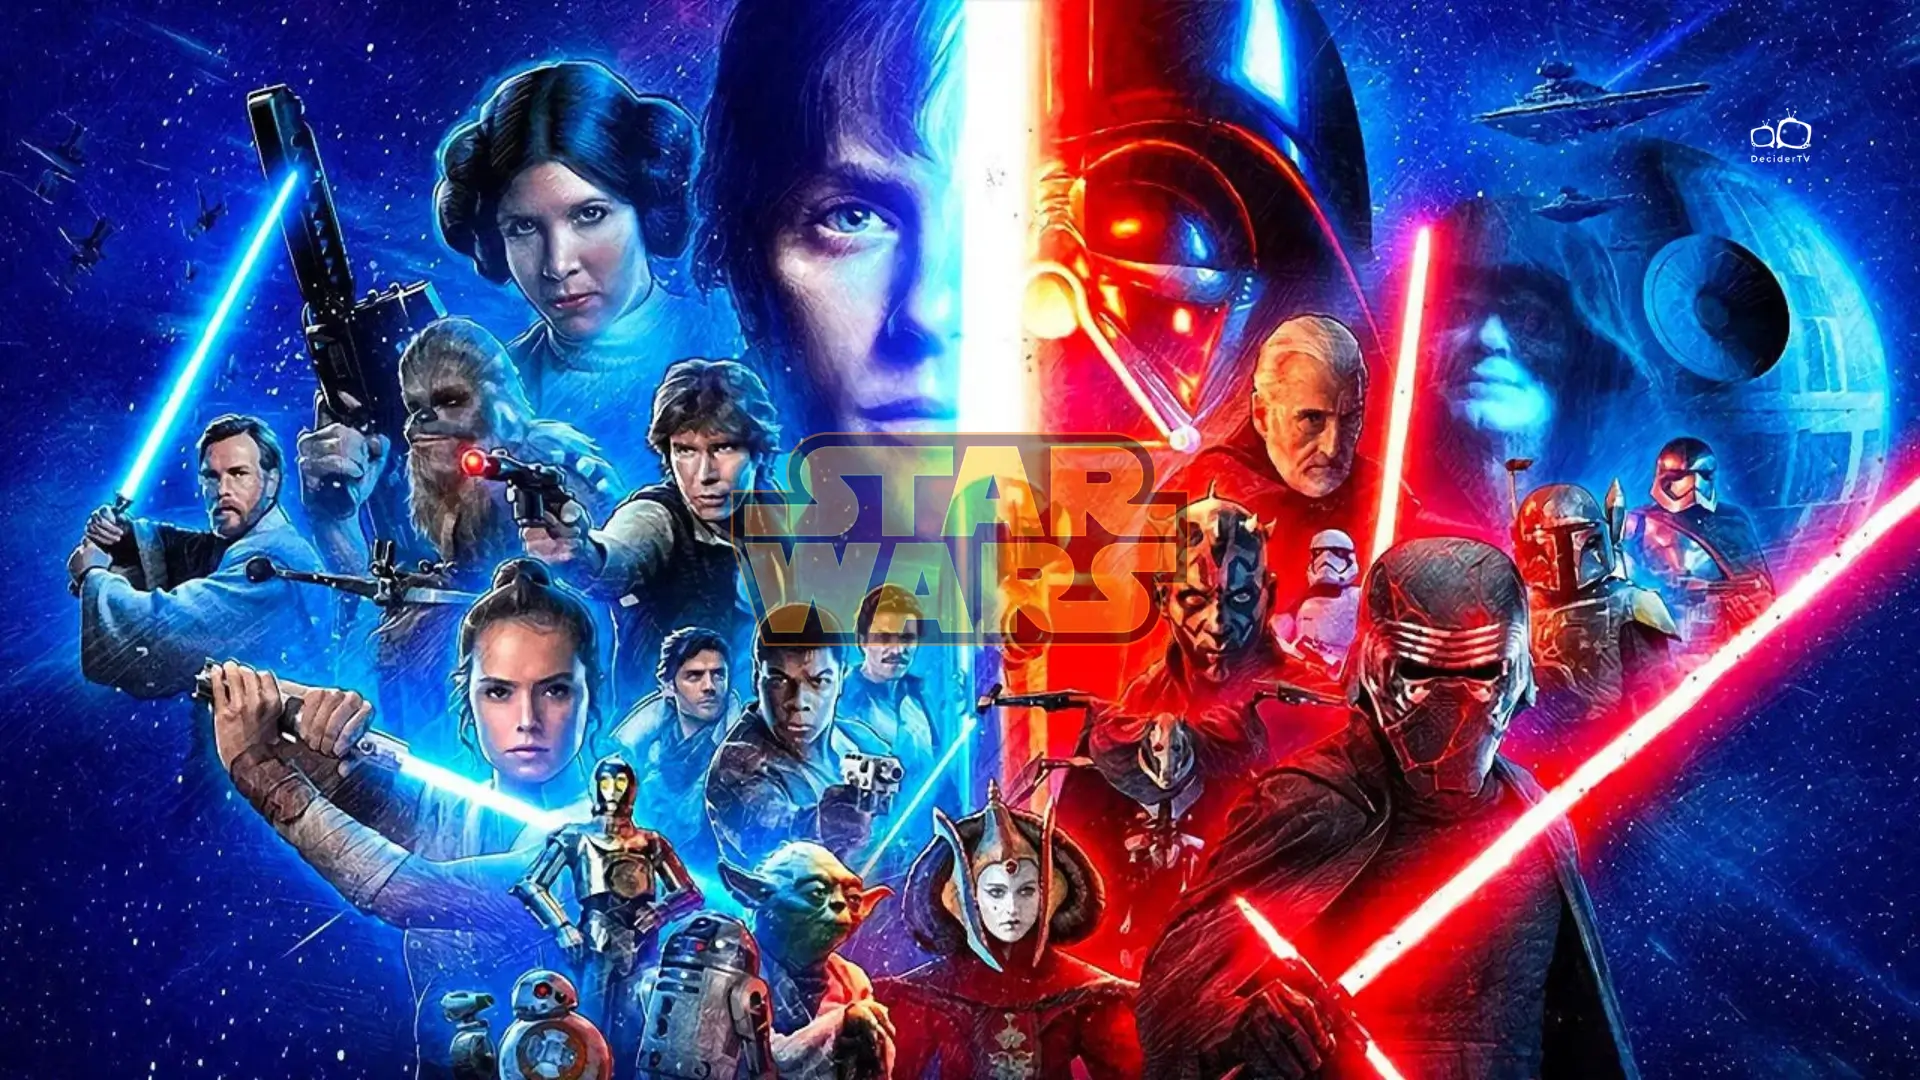 Star Wars Movies in Order